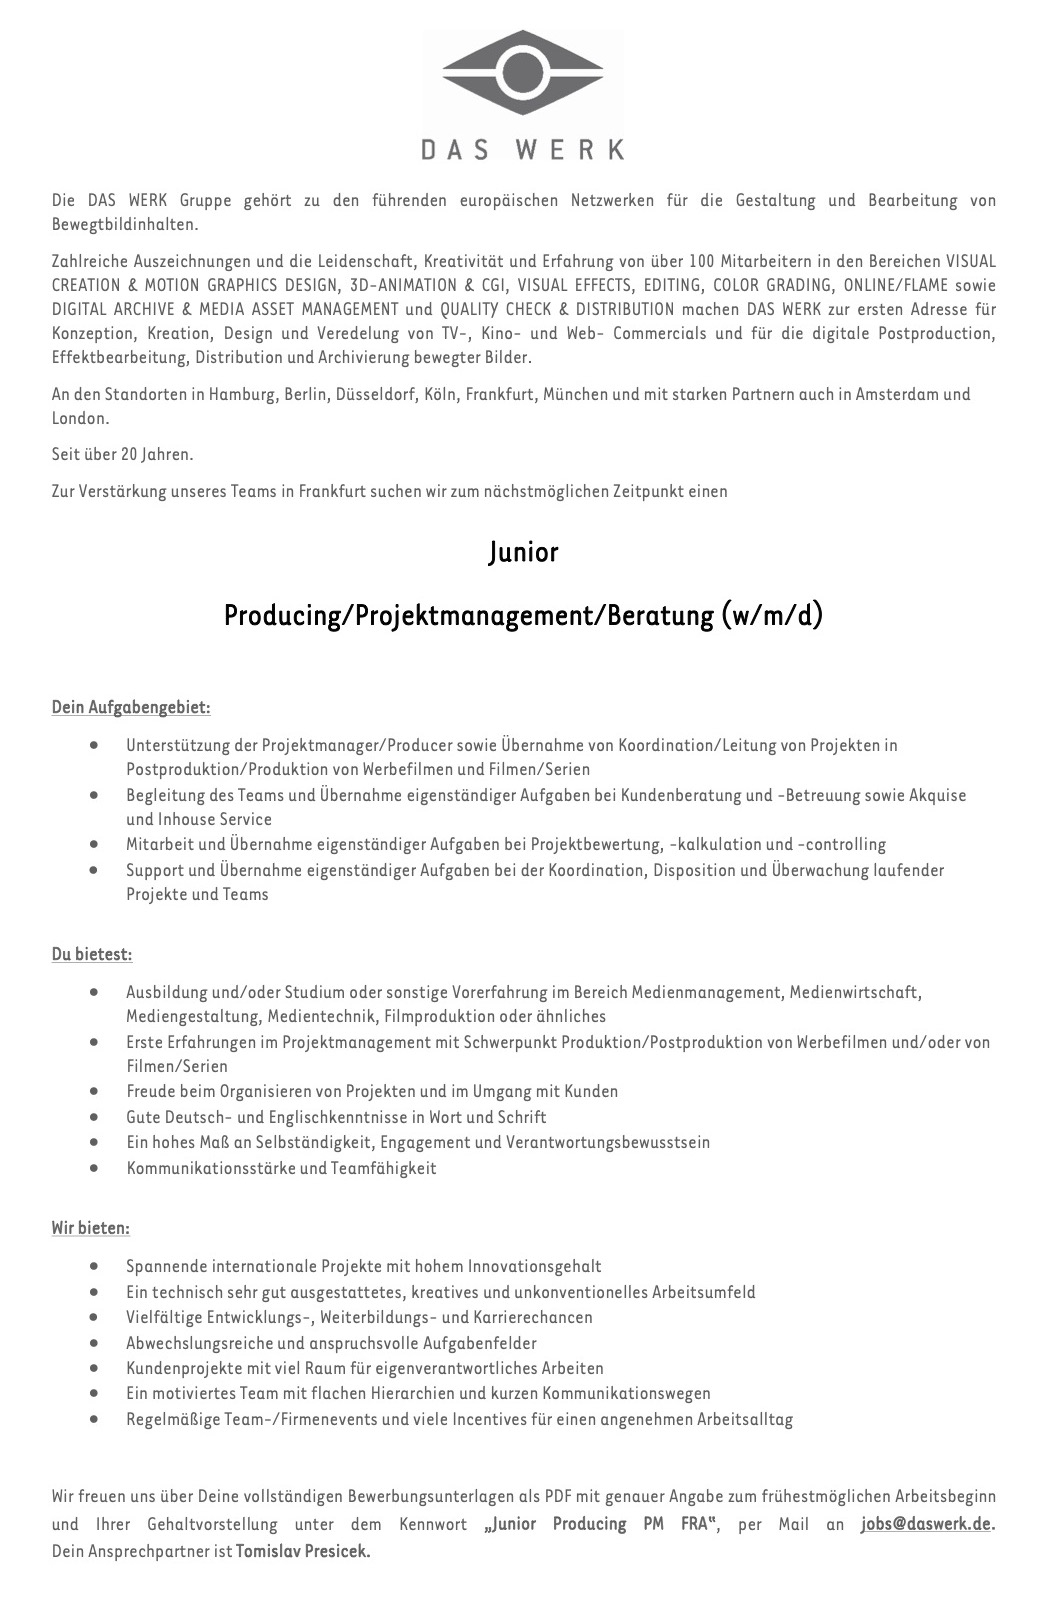 Junior Producing / Projektmanagement / Beratung (w/m/d)